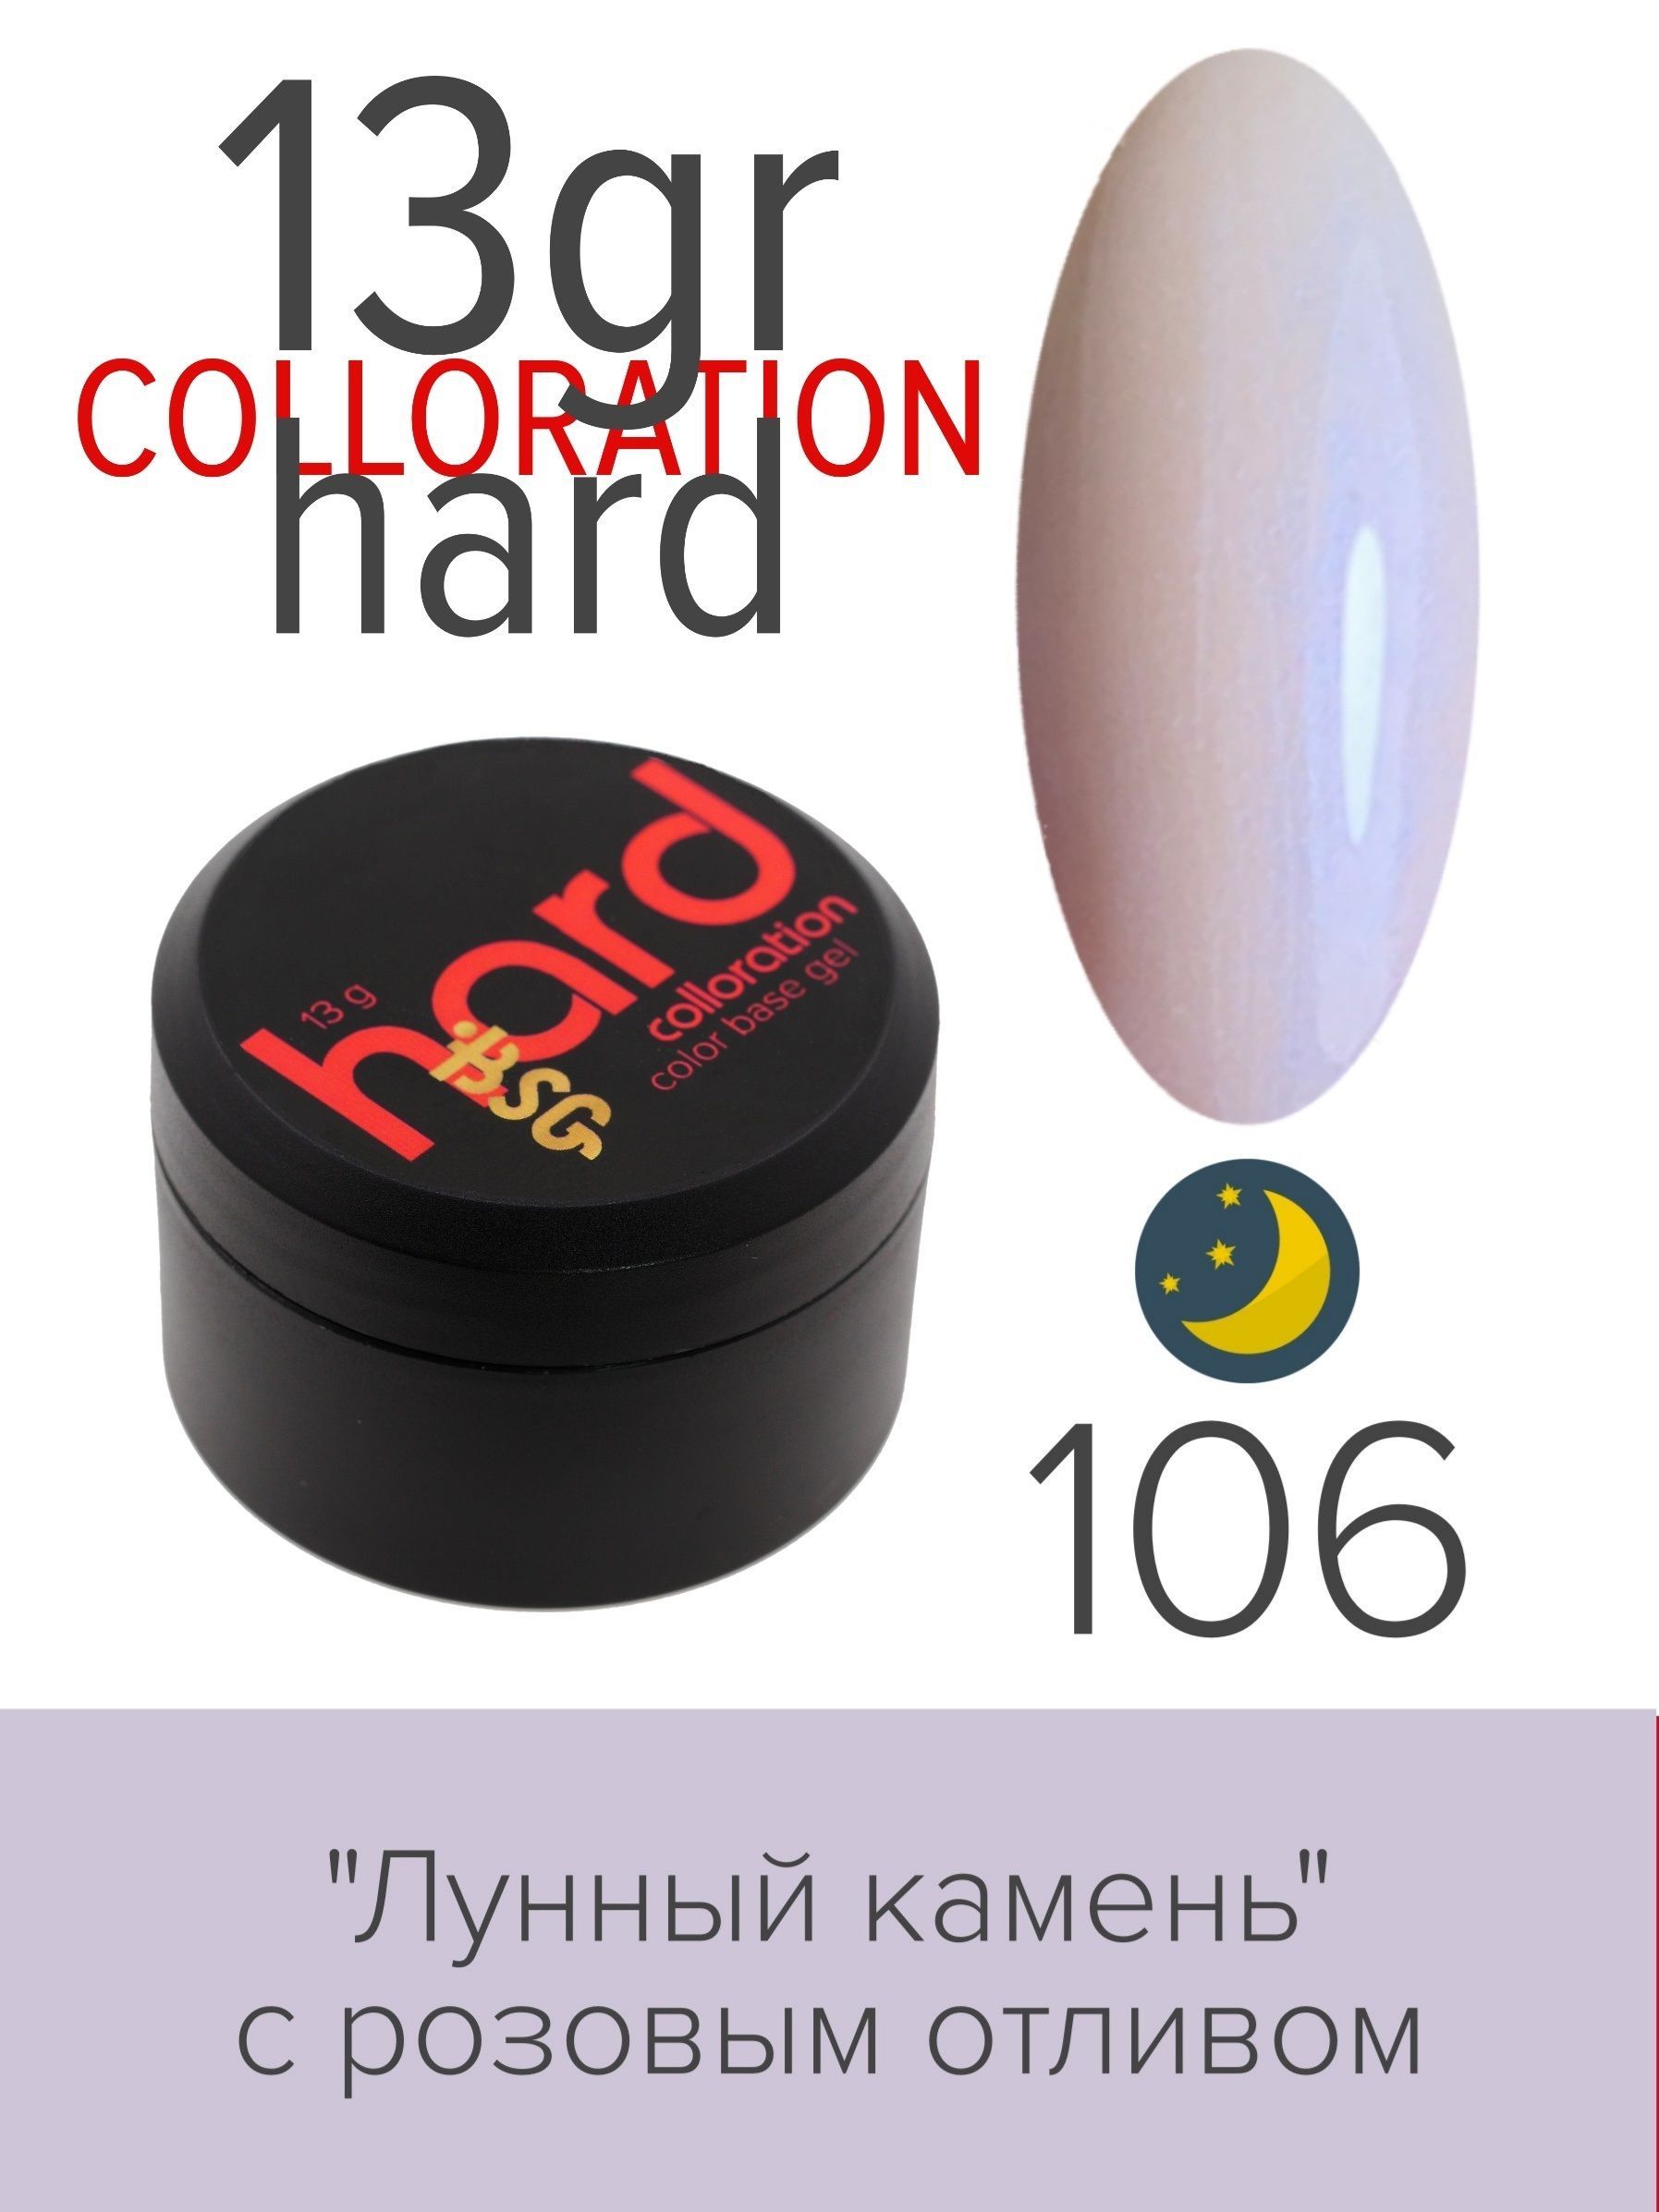 База BSG Colloration Hard цветная жесткая №106